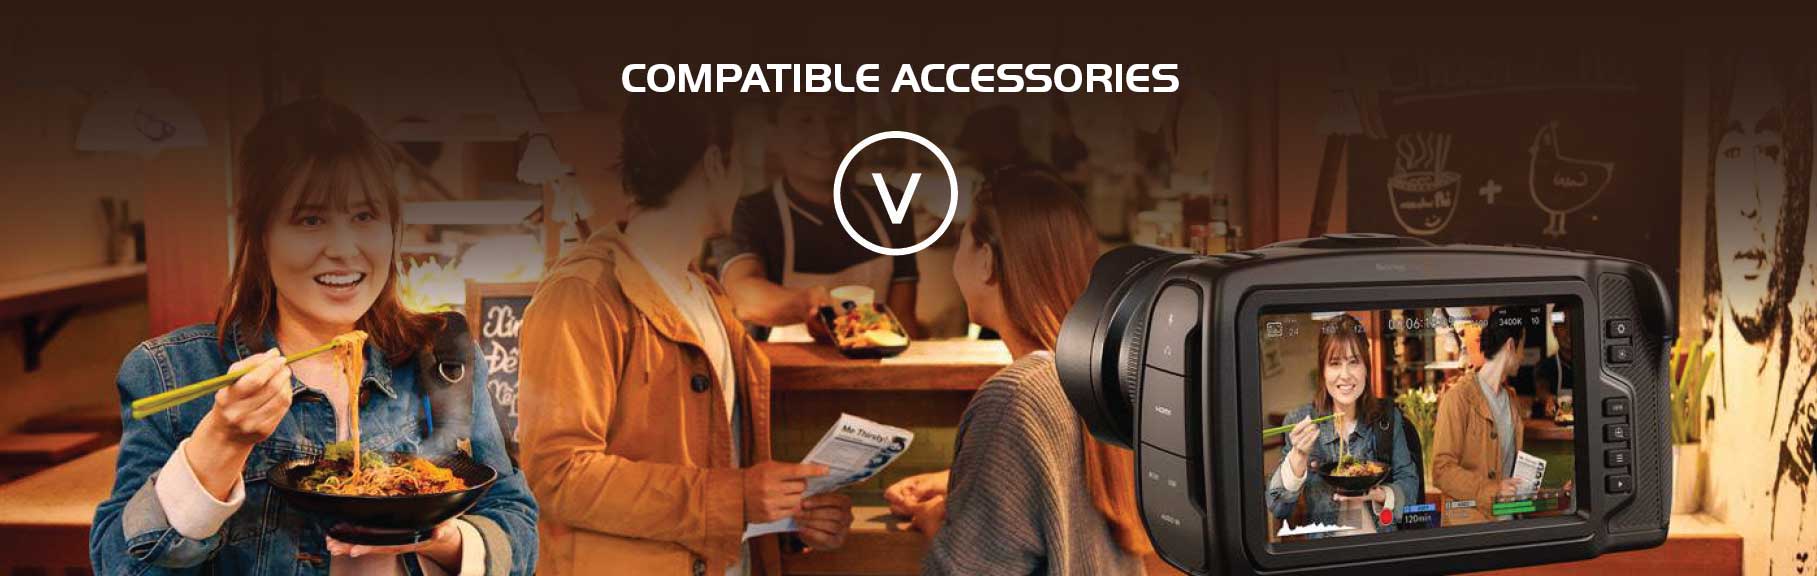 Blackmagic Design Pocket Cinema Camera 4K Compatable Accessories